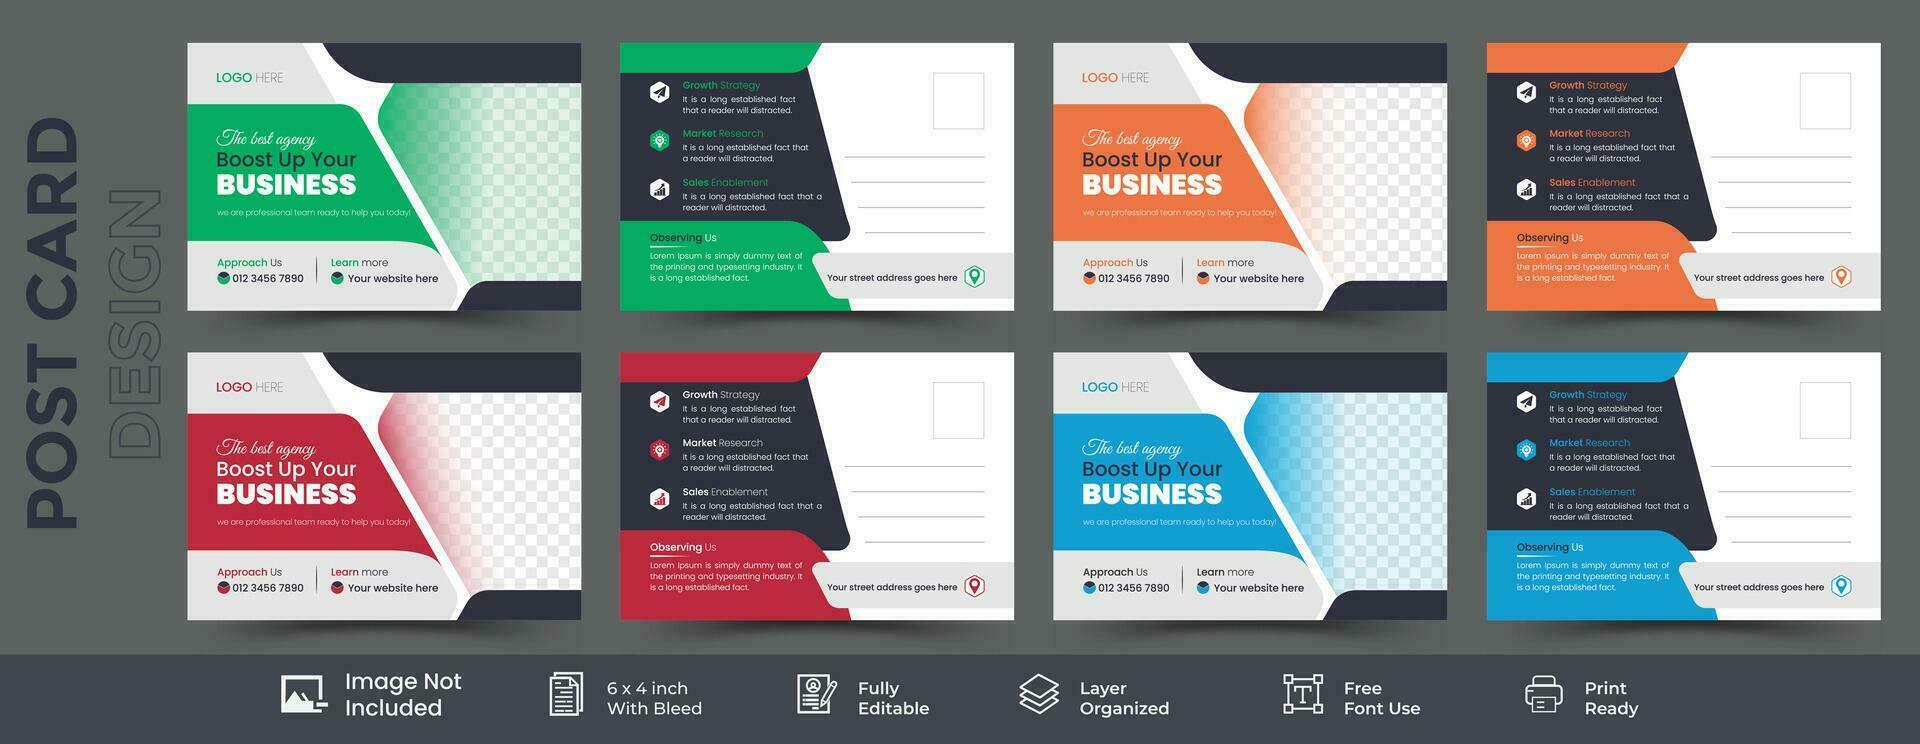 professional business marketing postcard template vector